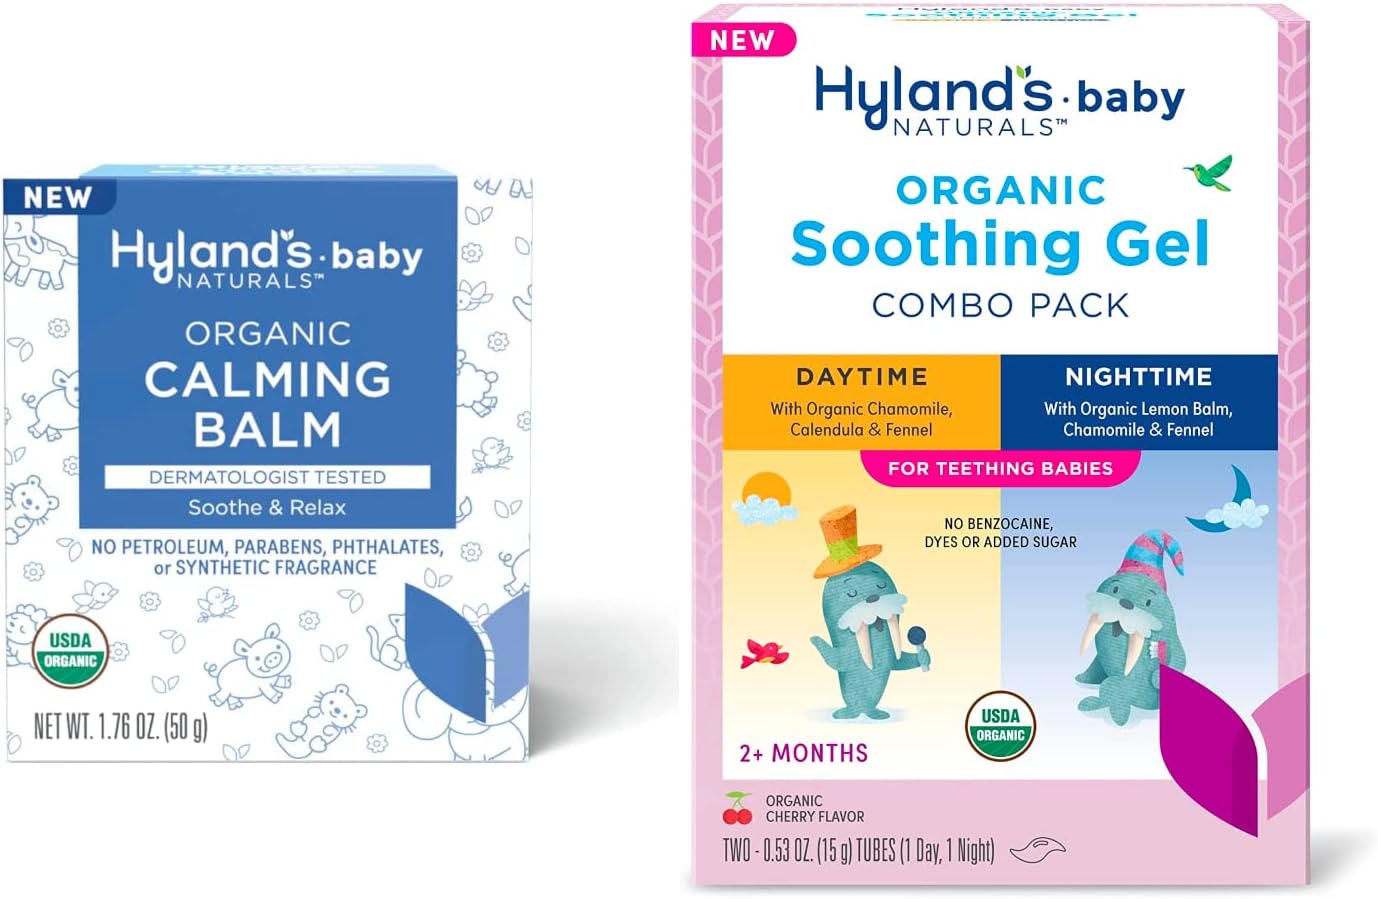 Bundle of Hyland's Naturals Baby Organic Calming Balm + Organic Daytime/Nighttime Oral Soothing Gel Combo Pack